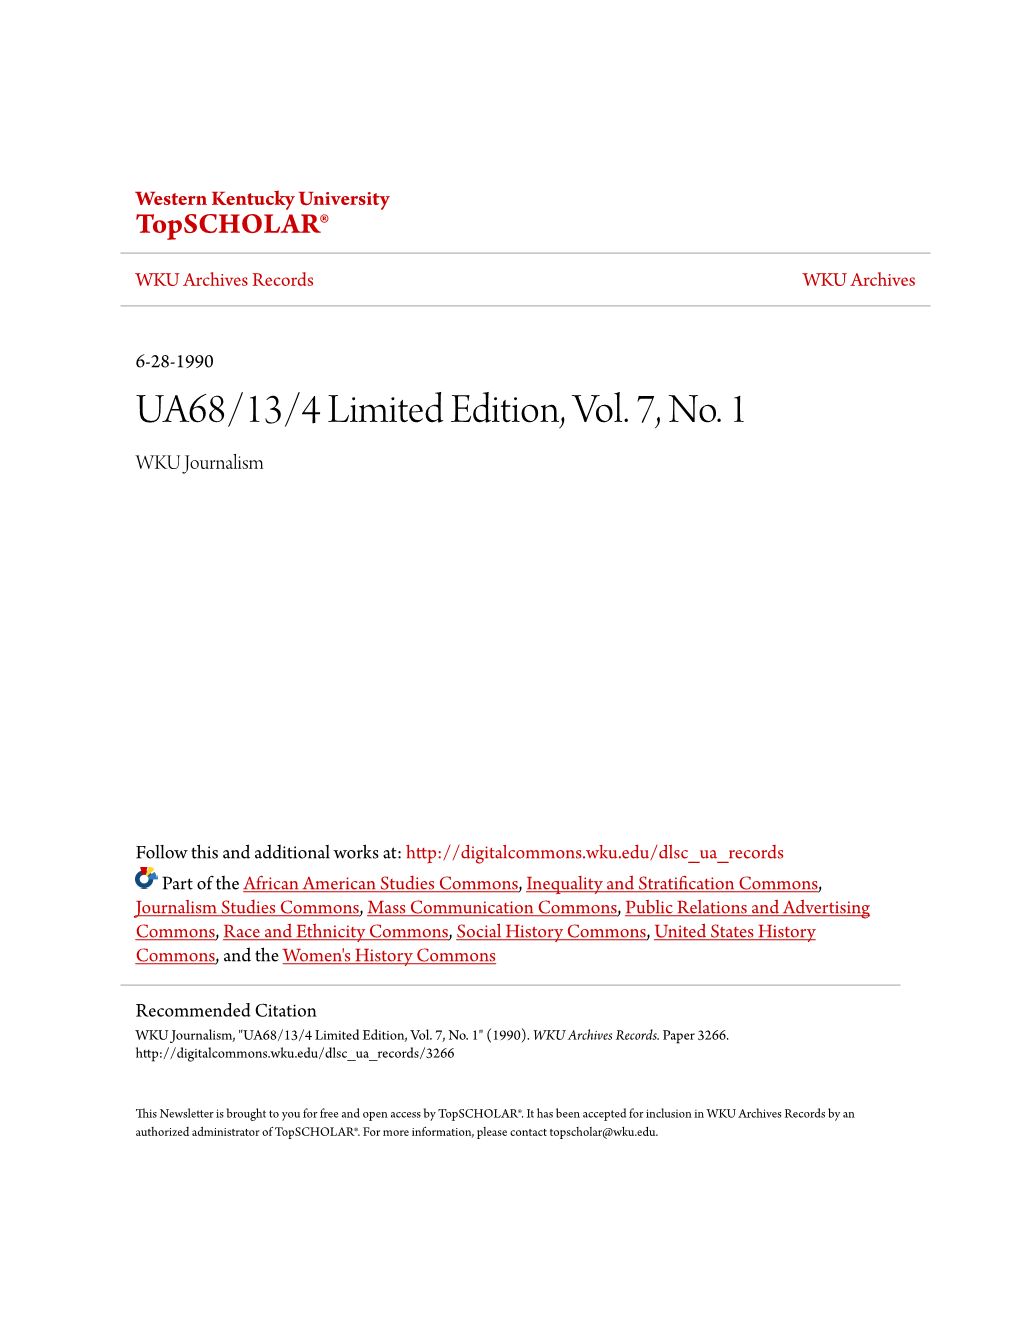 UA68/13/4 Limited Edition, Vol. 7, No. 1 WKU Journalism